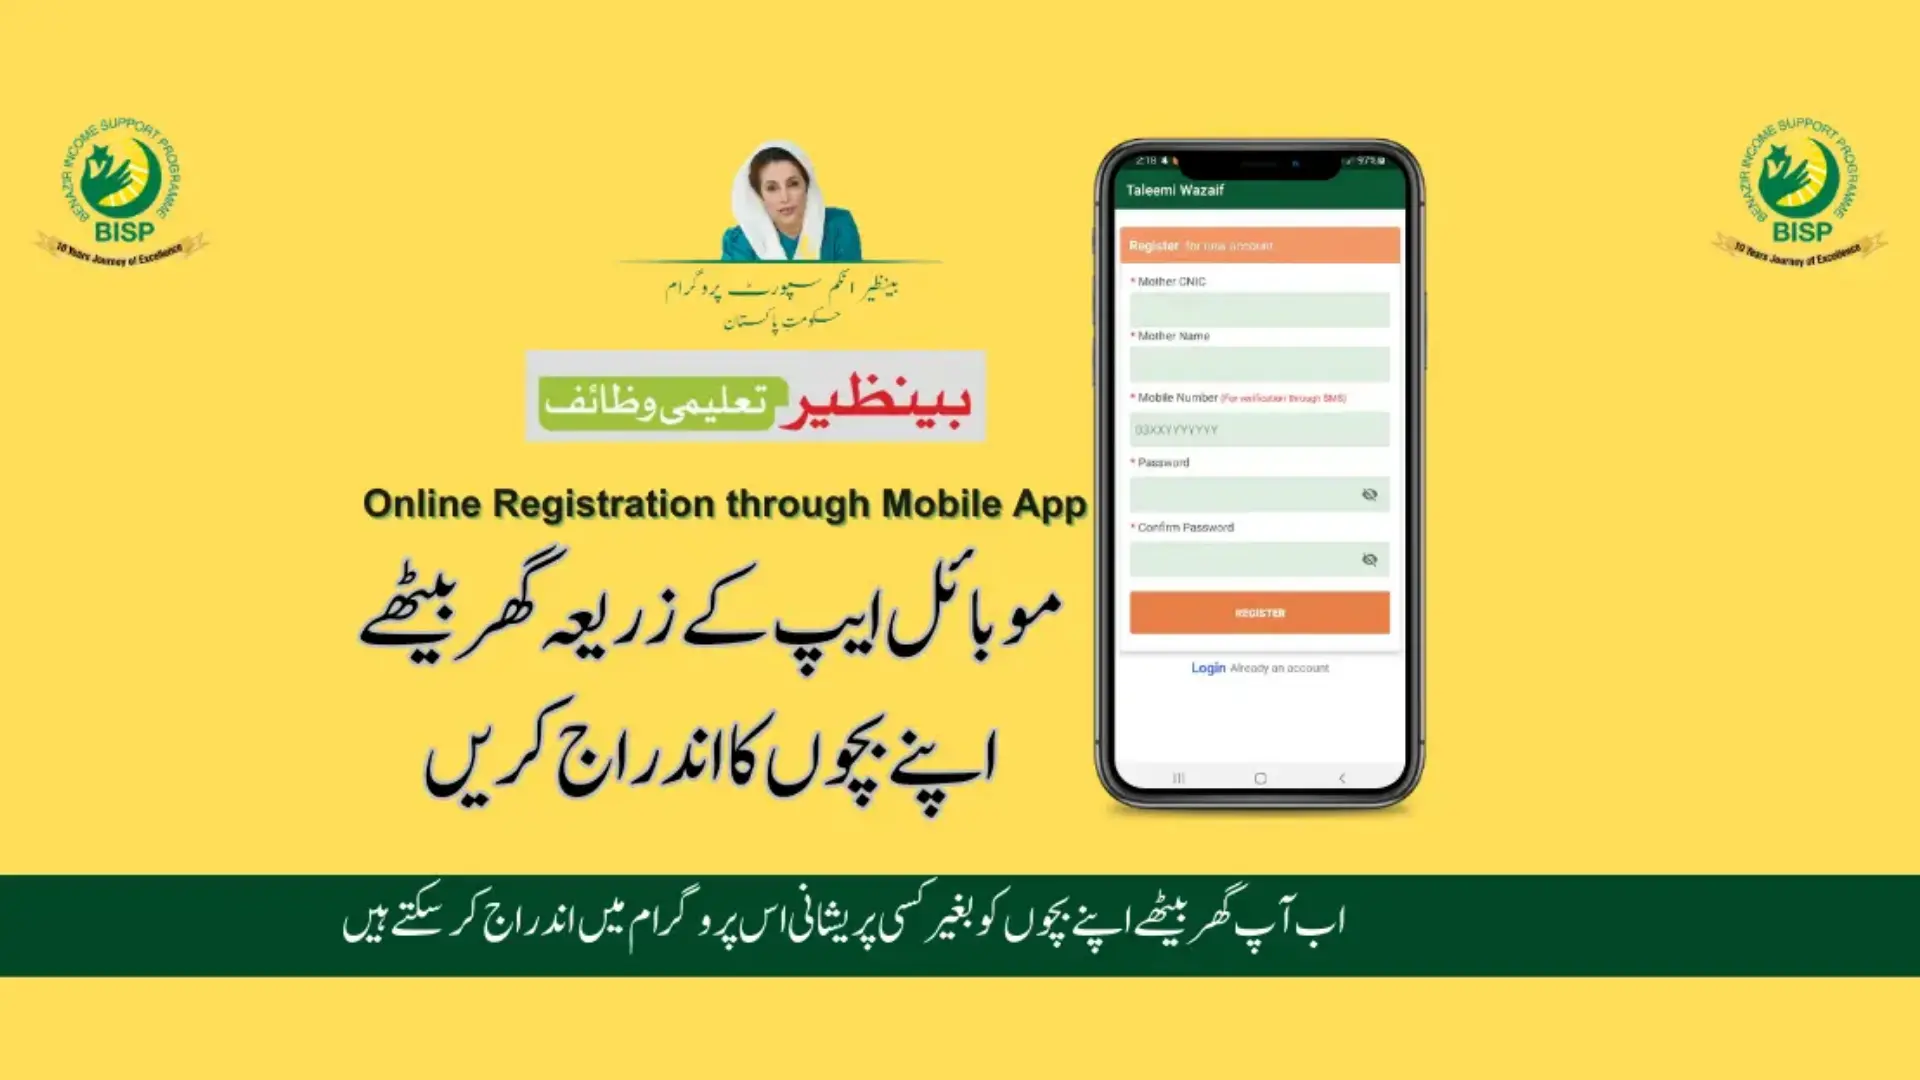 Waseela-e-Taleem Registration Through Mobile App